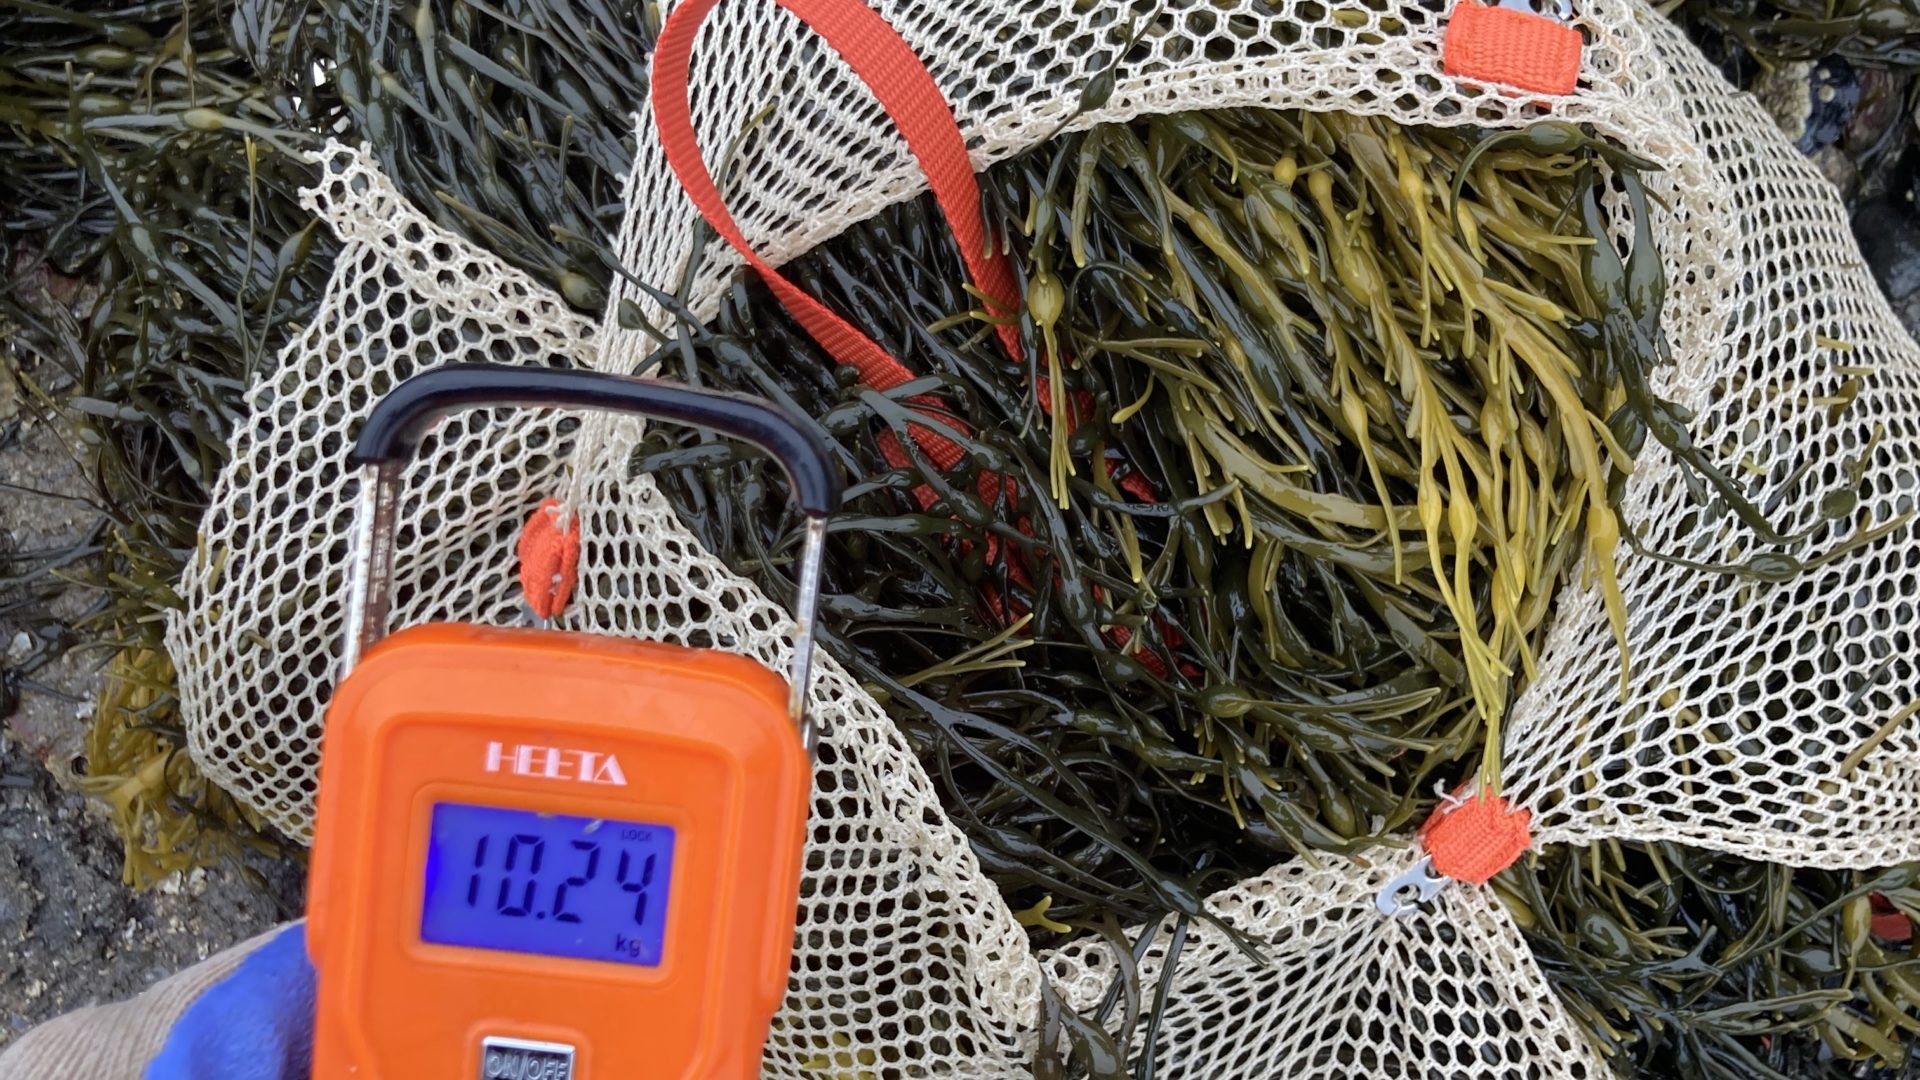 Weighing seaweed